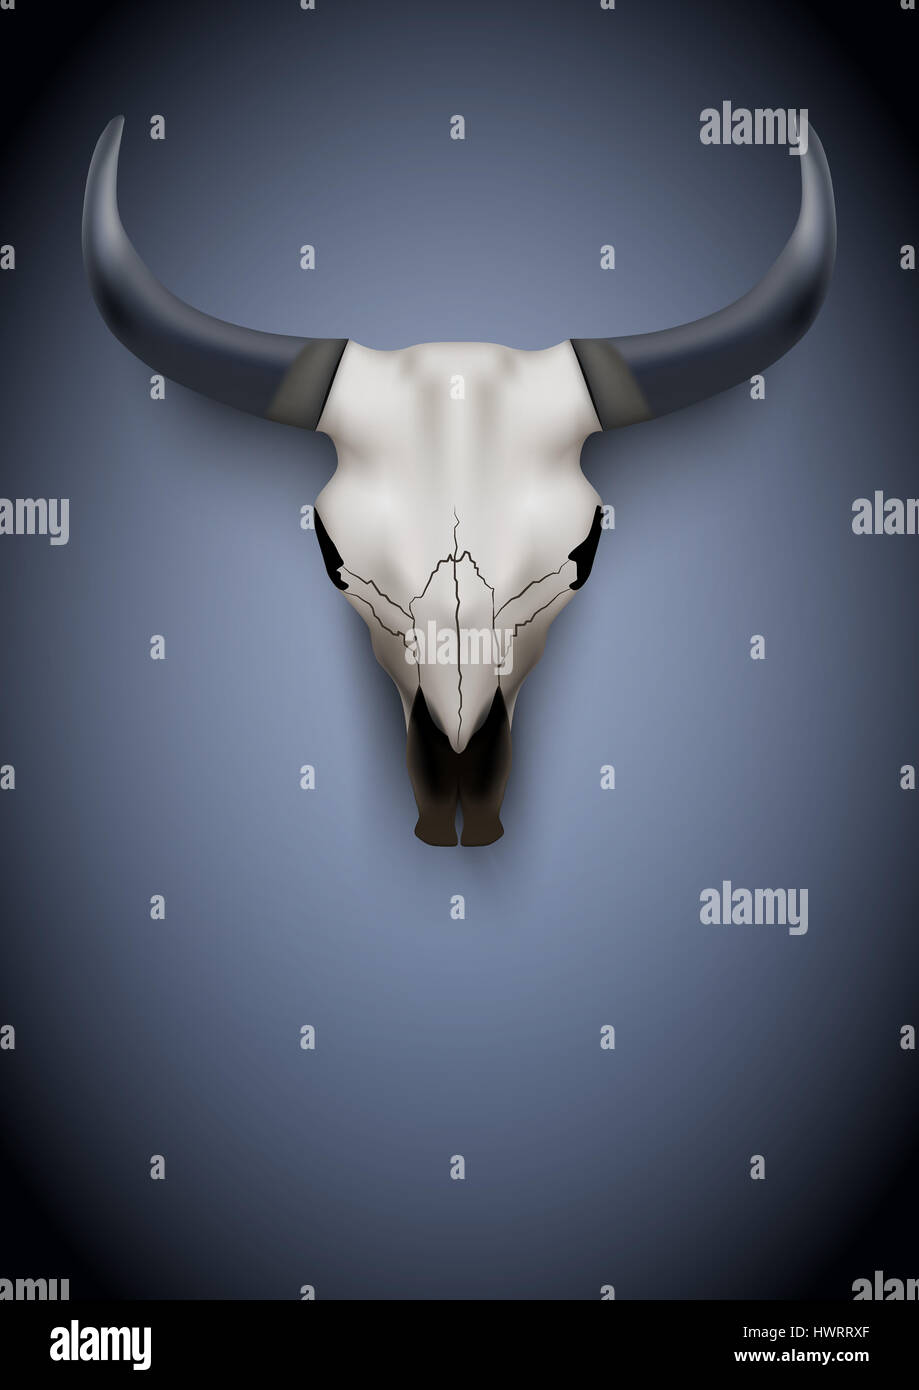 Animal Skull Poster. Party Invitation with animal skull.  Illustration Background Stock Photo